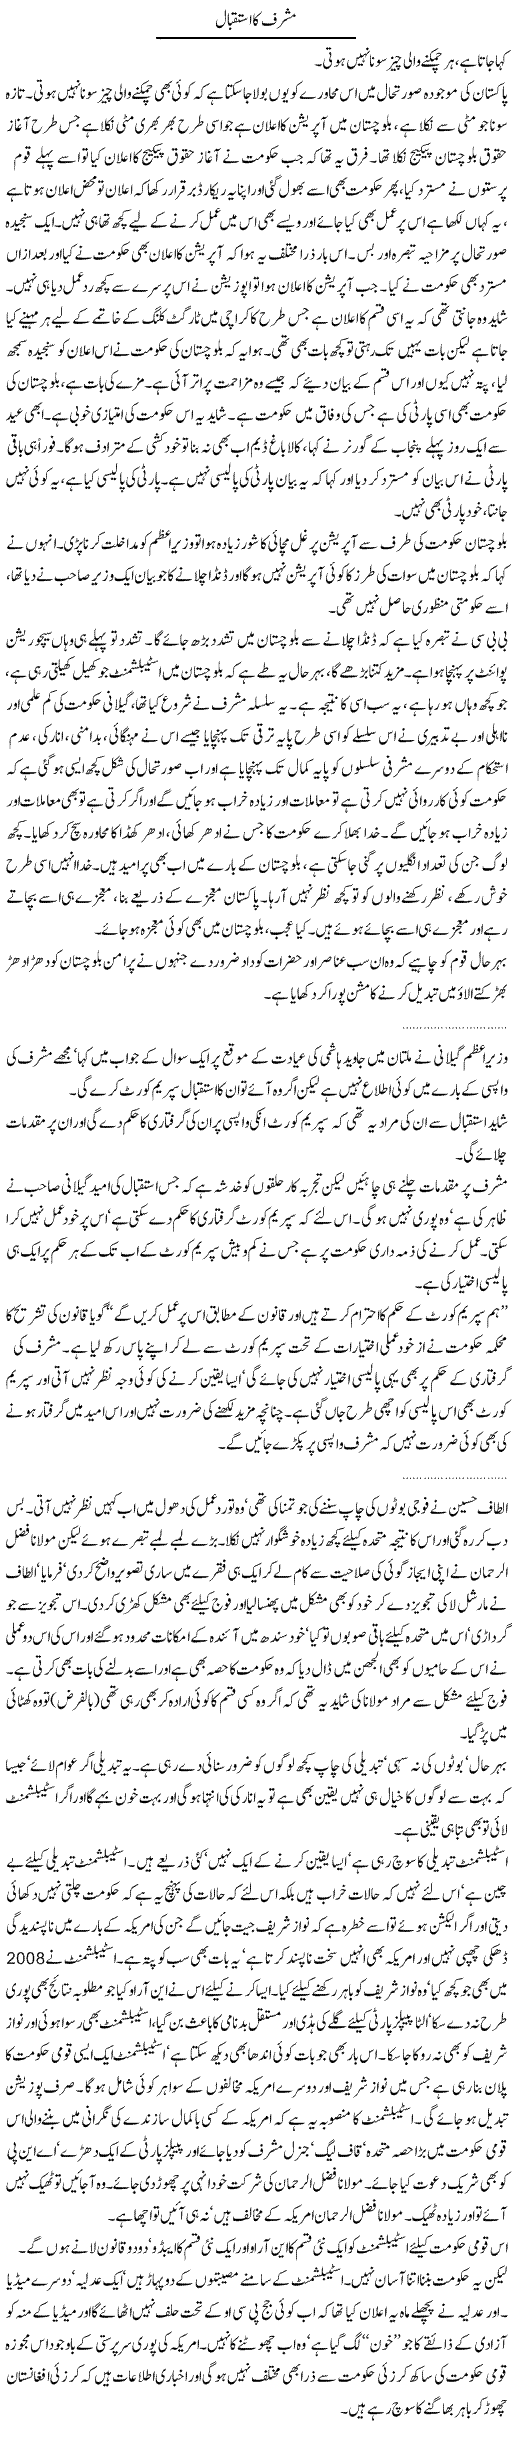 Musharraf Welcome Express Column Abdullah Tariq 14 September 2010